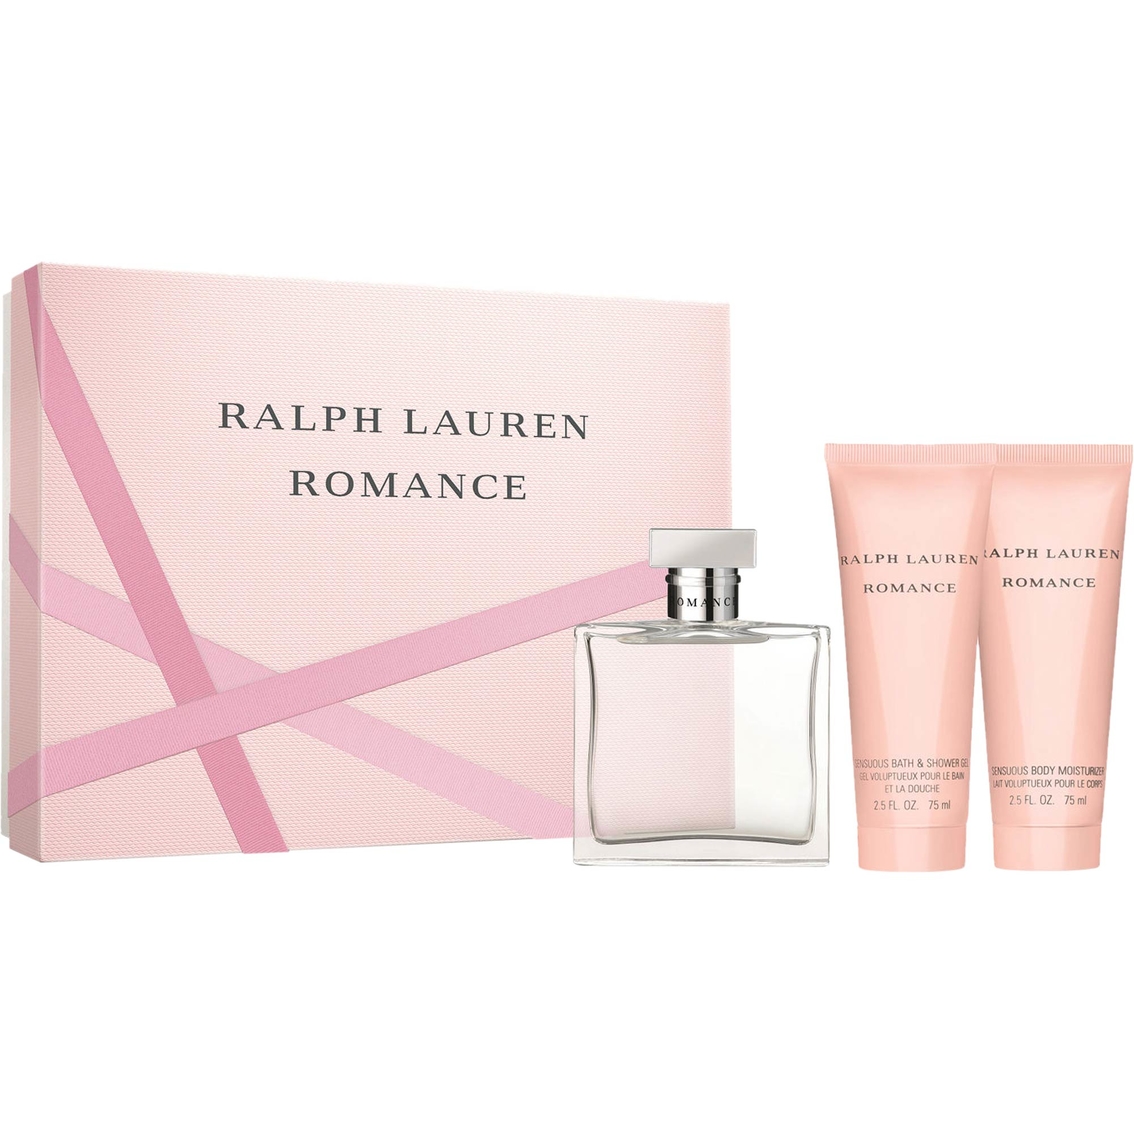 midnight romance perfume gift set